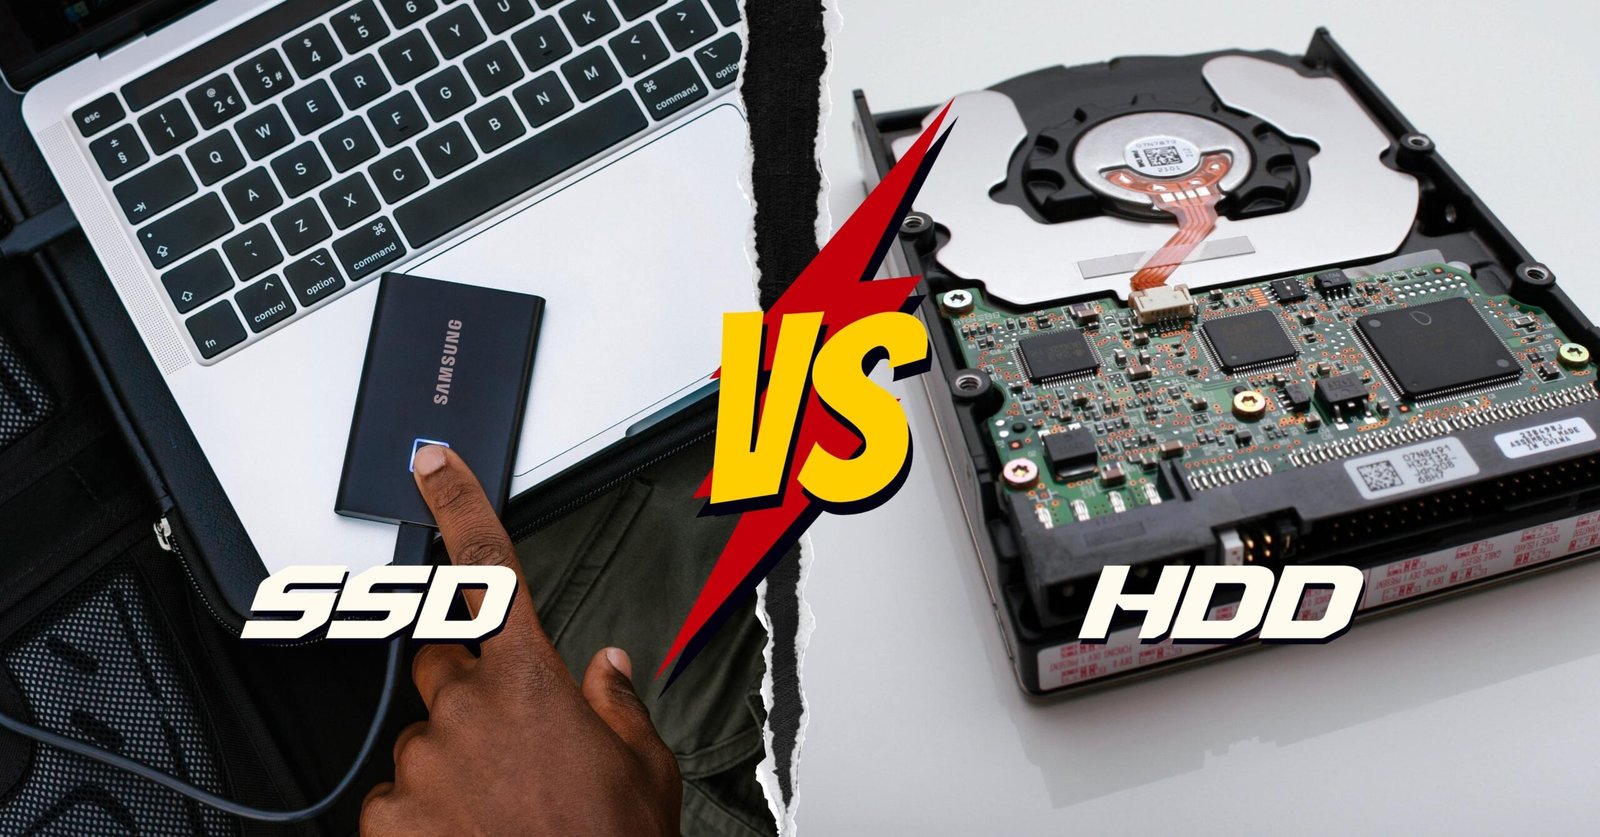 SSD VS HDD